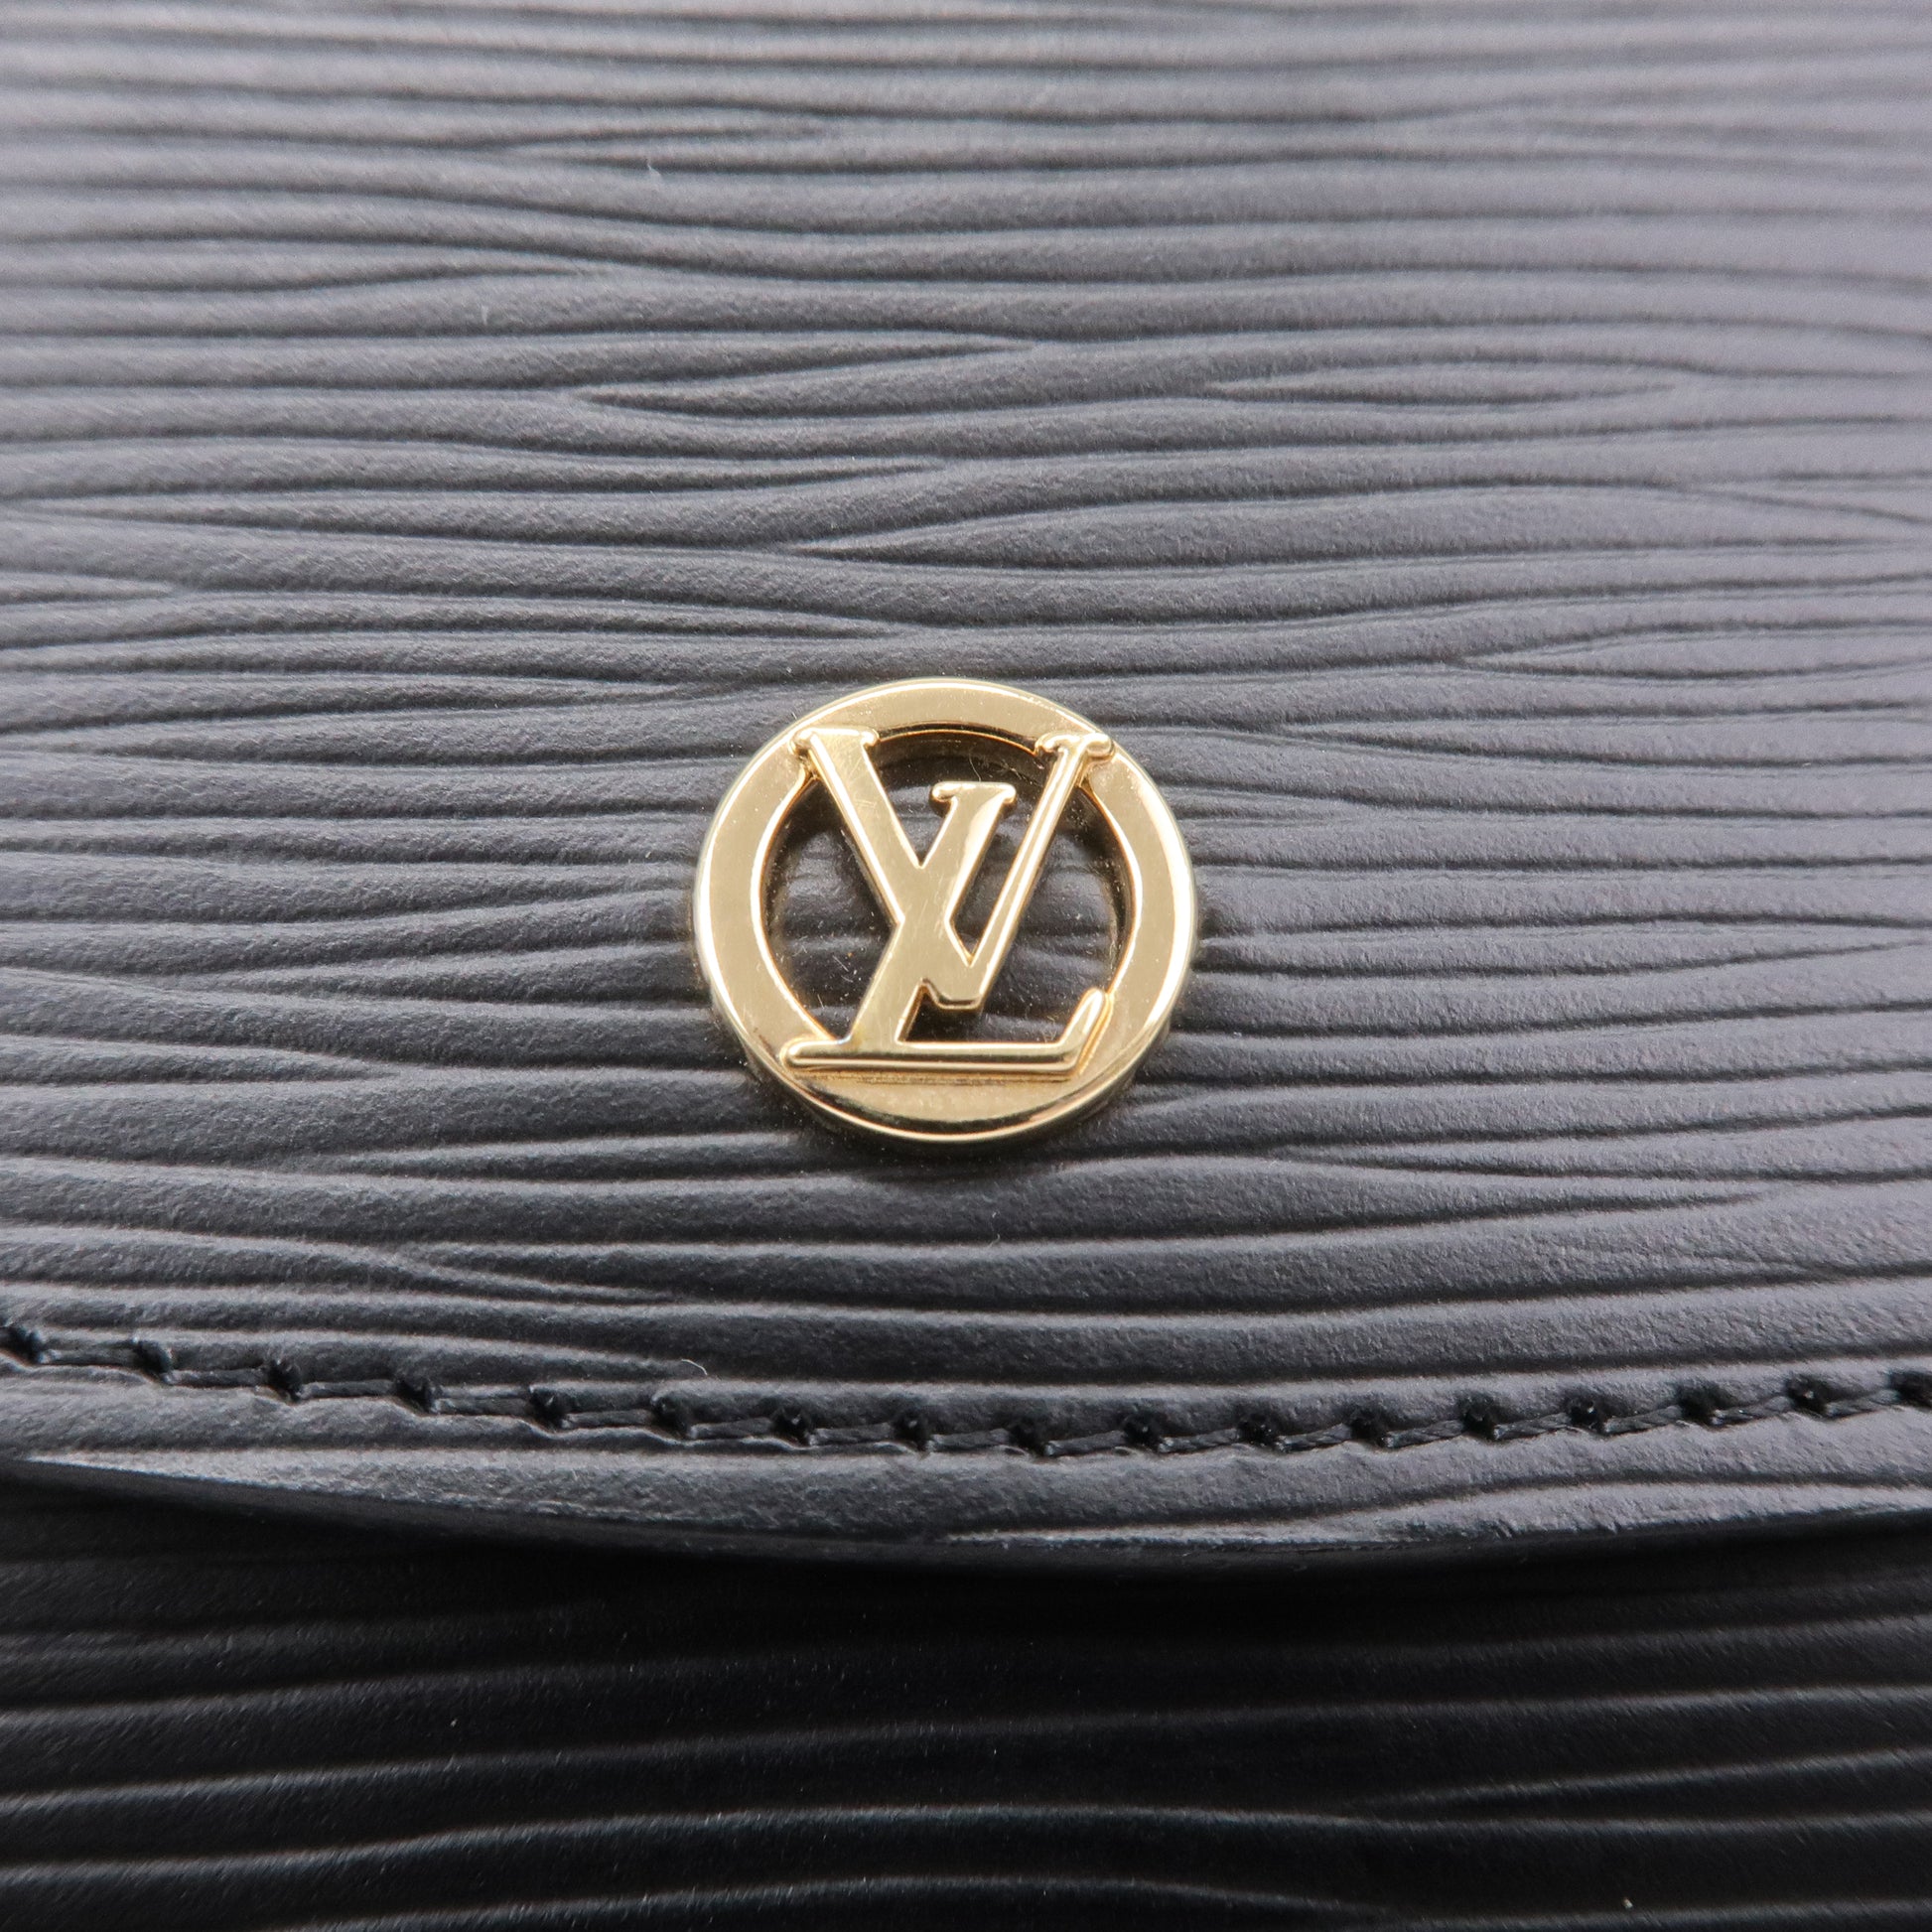 Clutch bag Louis Vuitton Beige in Cotton - 31117257